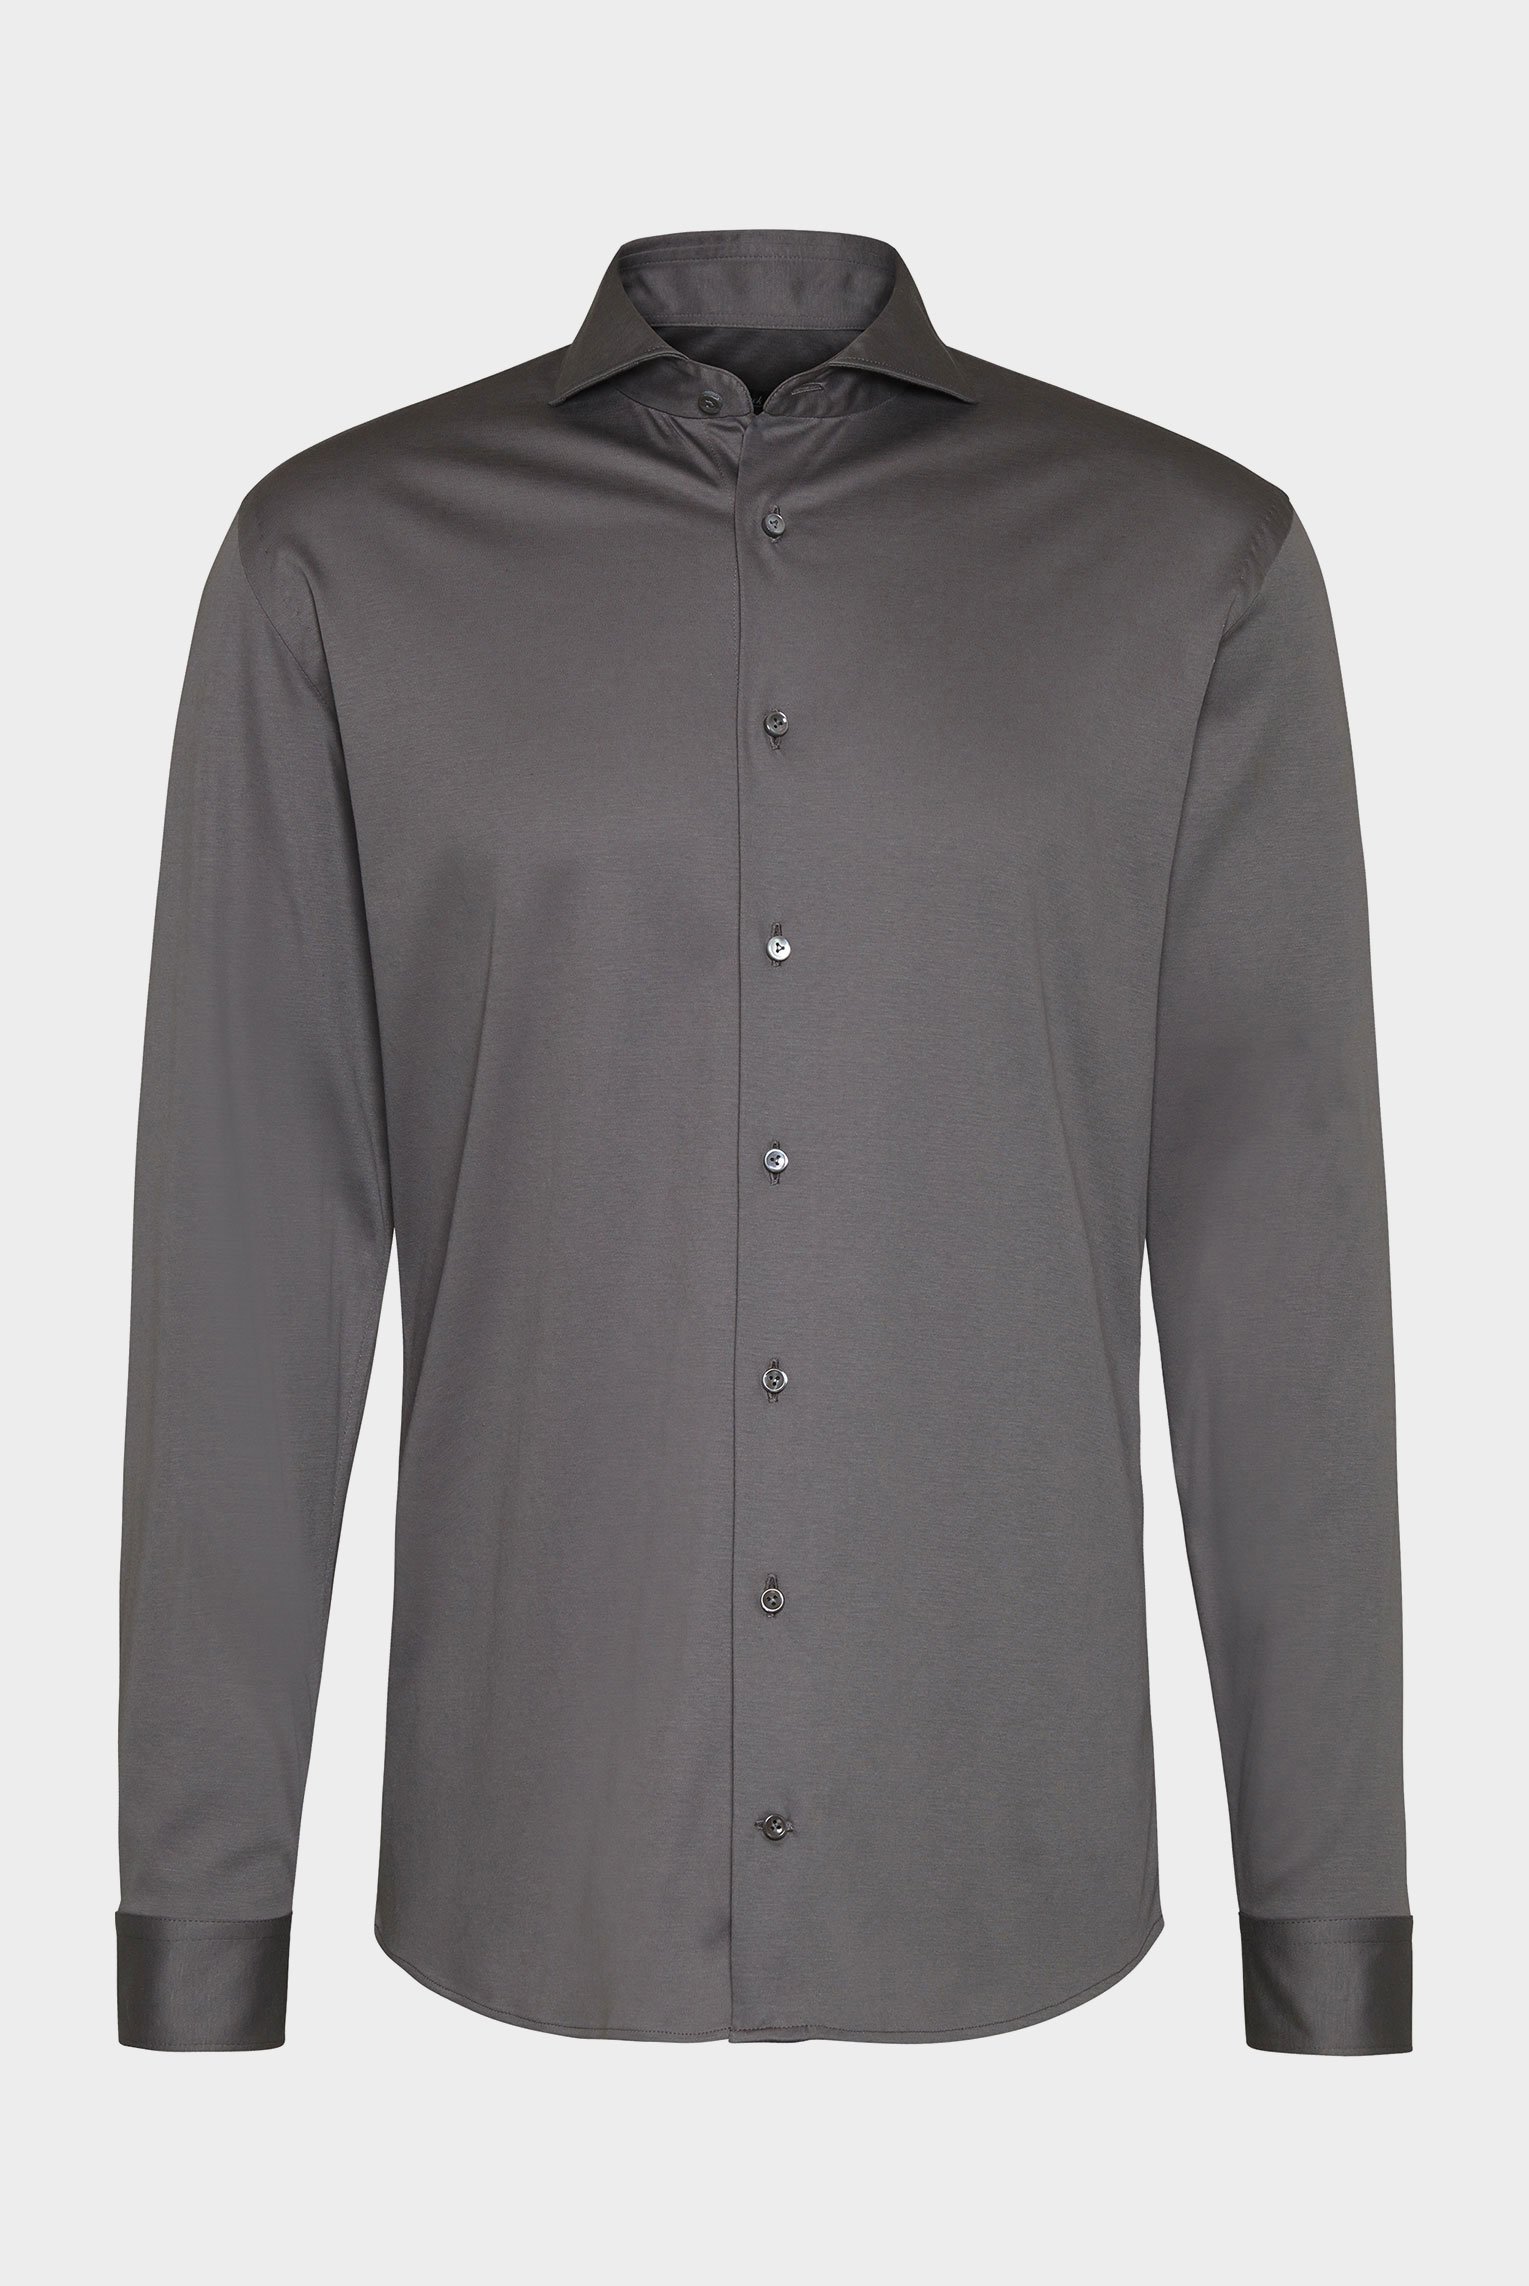 Casual Hemden+Jersey Hemd aus Schweizer Baumwolle Tailor Fit+20.1683.UC.180031.070.X3L